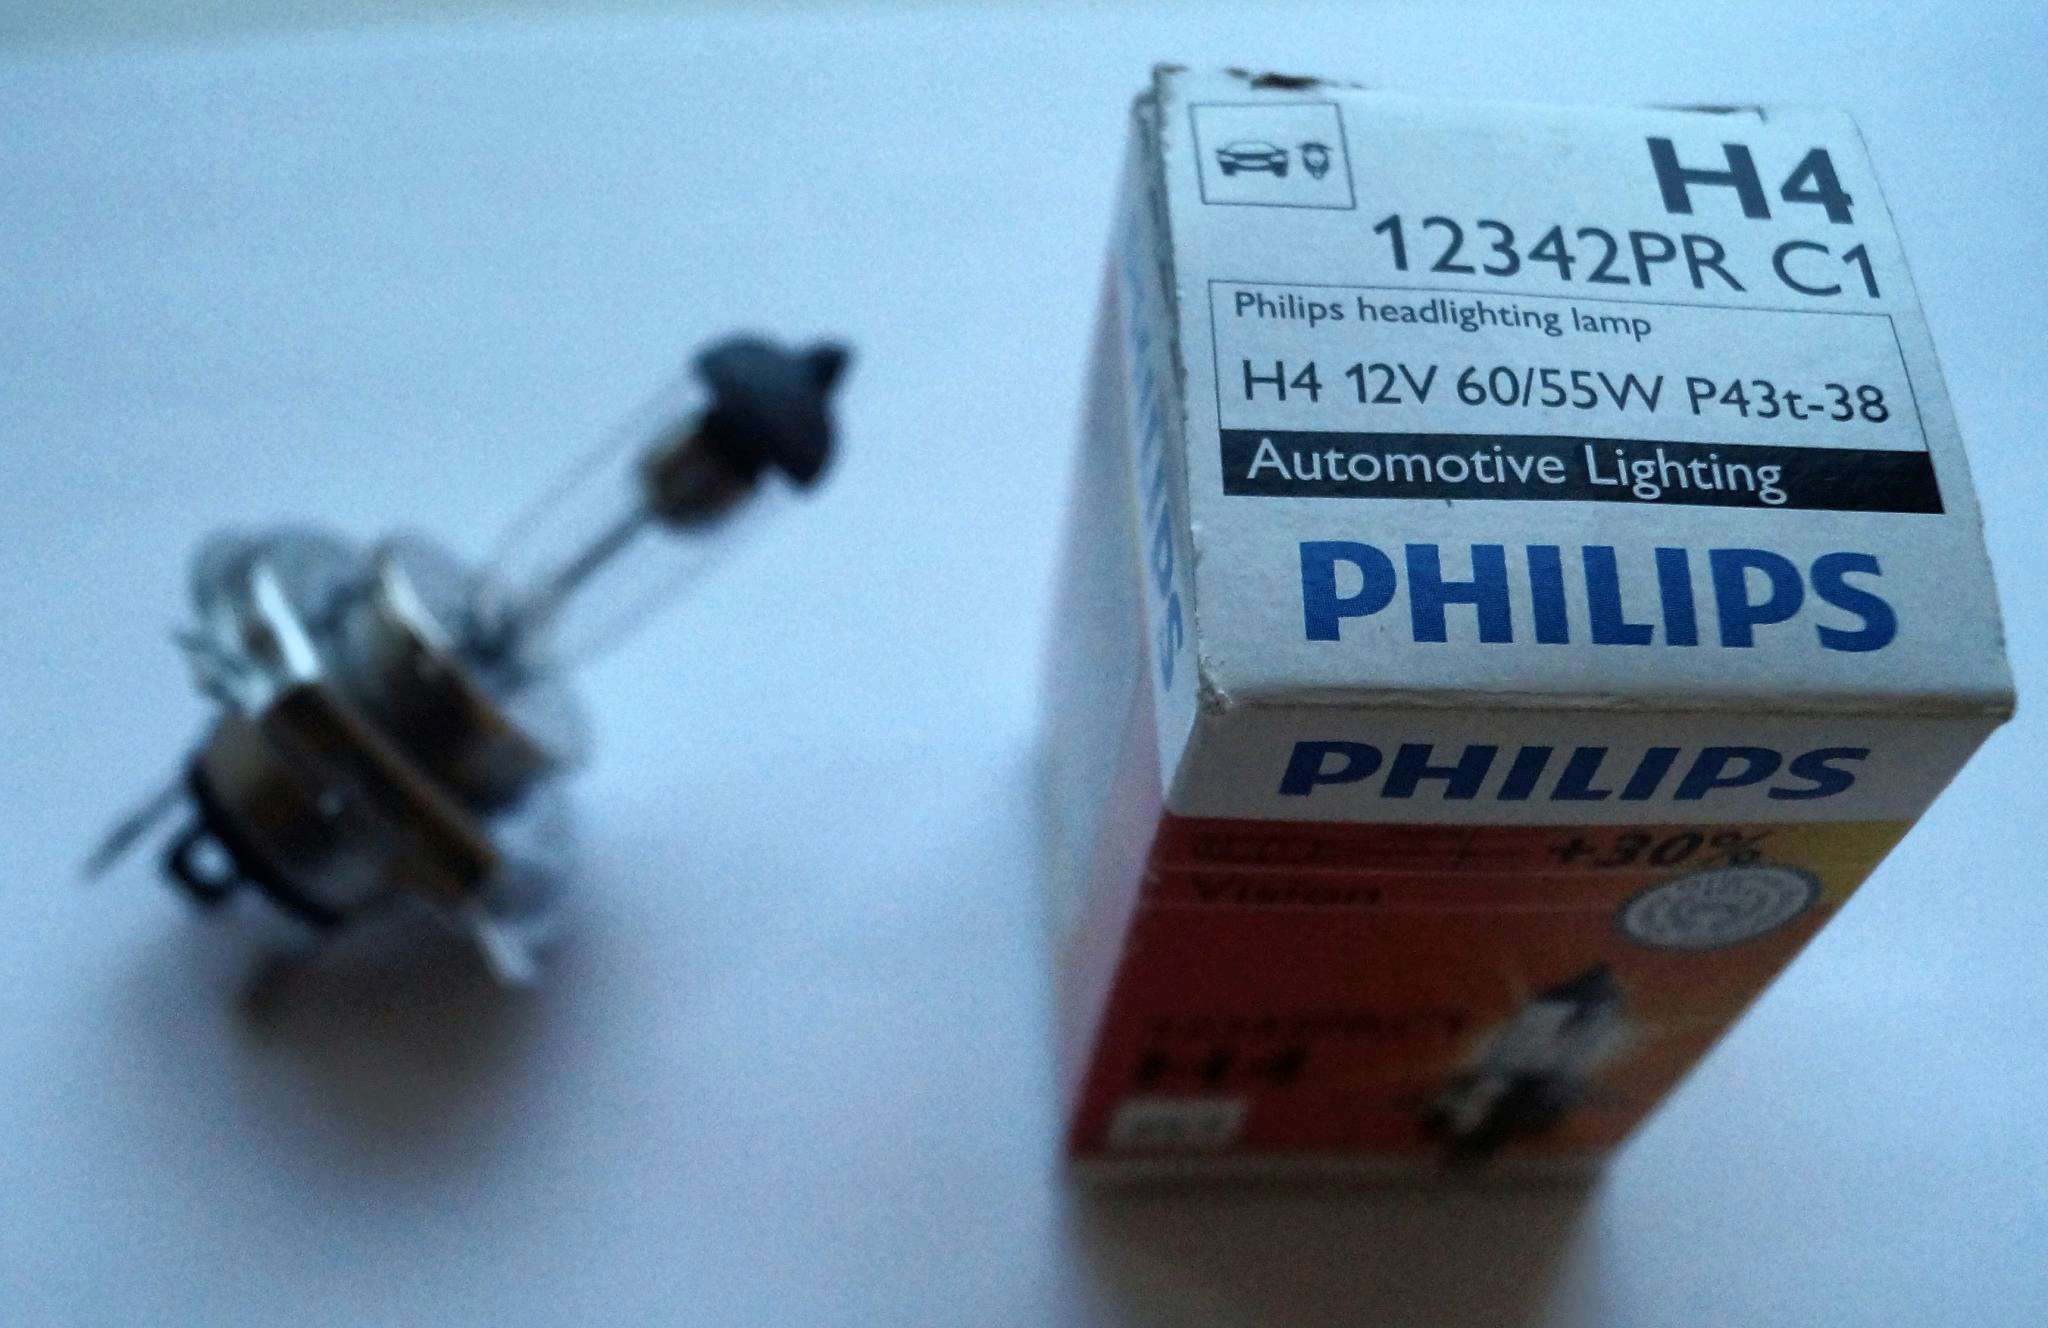 Philips h4 12342prc1. Лампа Philips h4 12342prc1. Philips h4 12342prc1 12v 60/55w. Philips h4 12342 12v 60/55w.